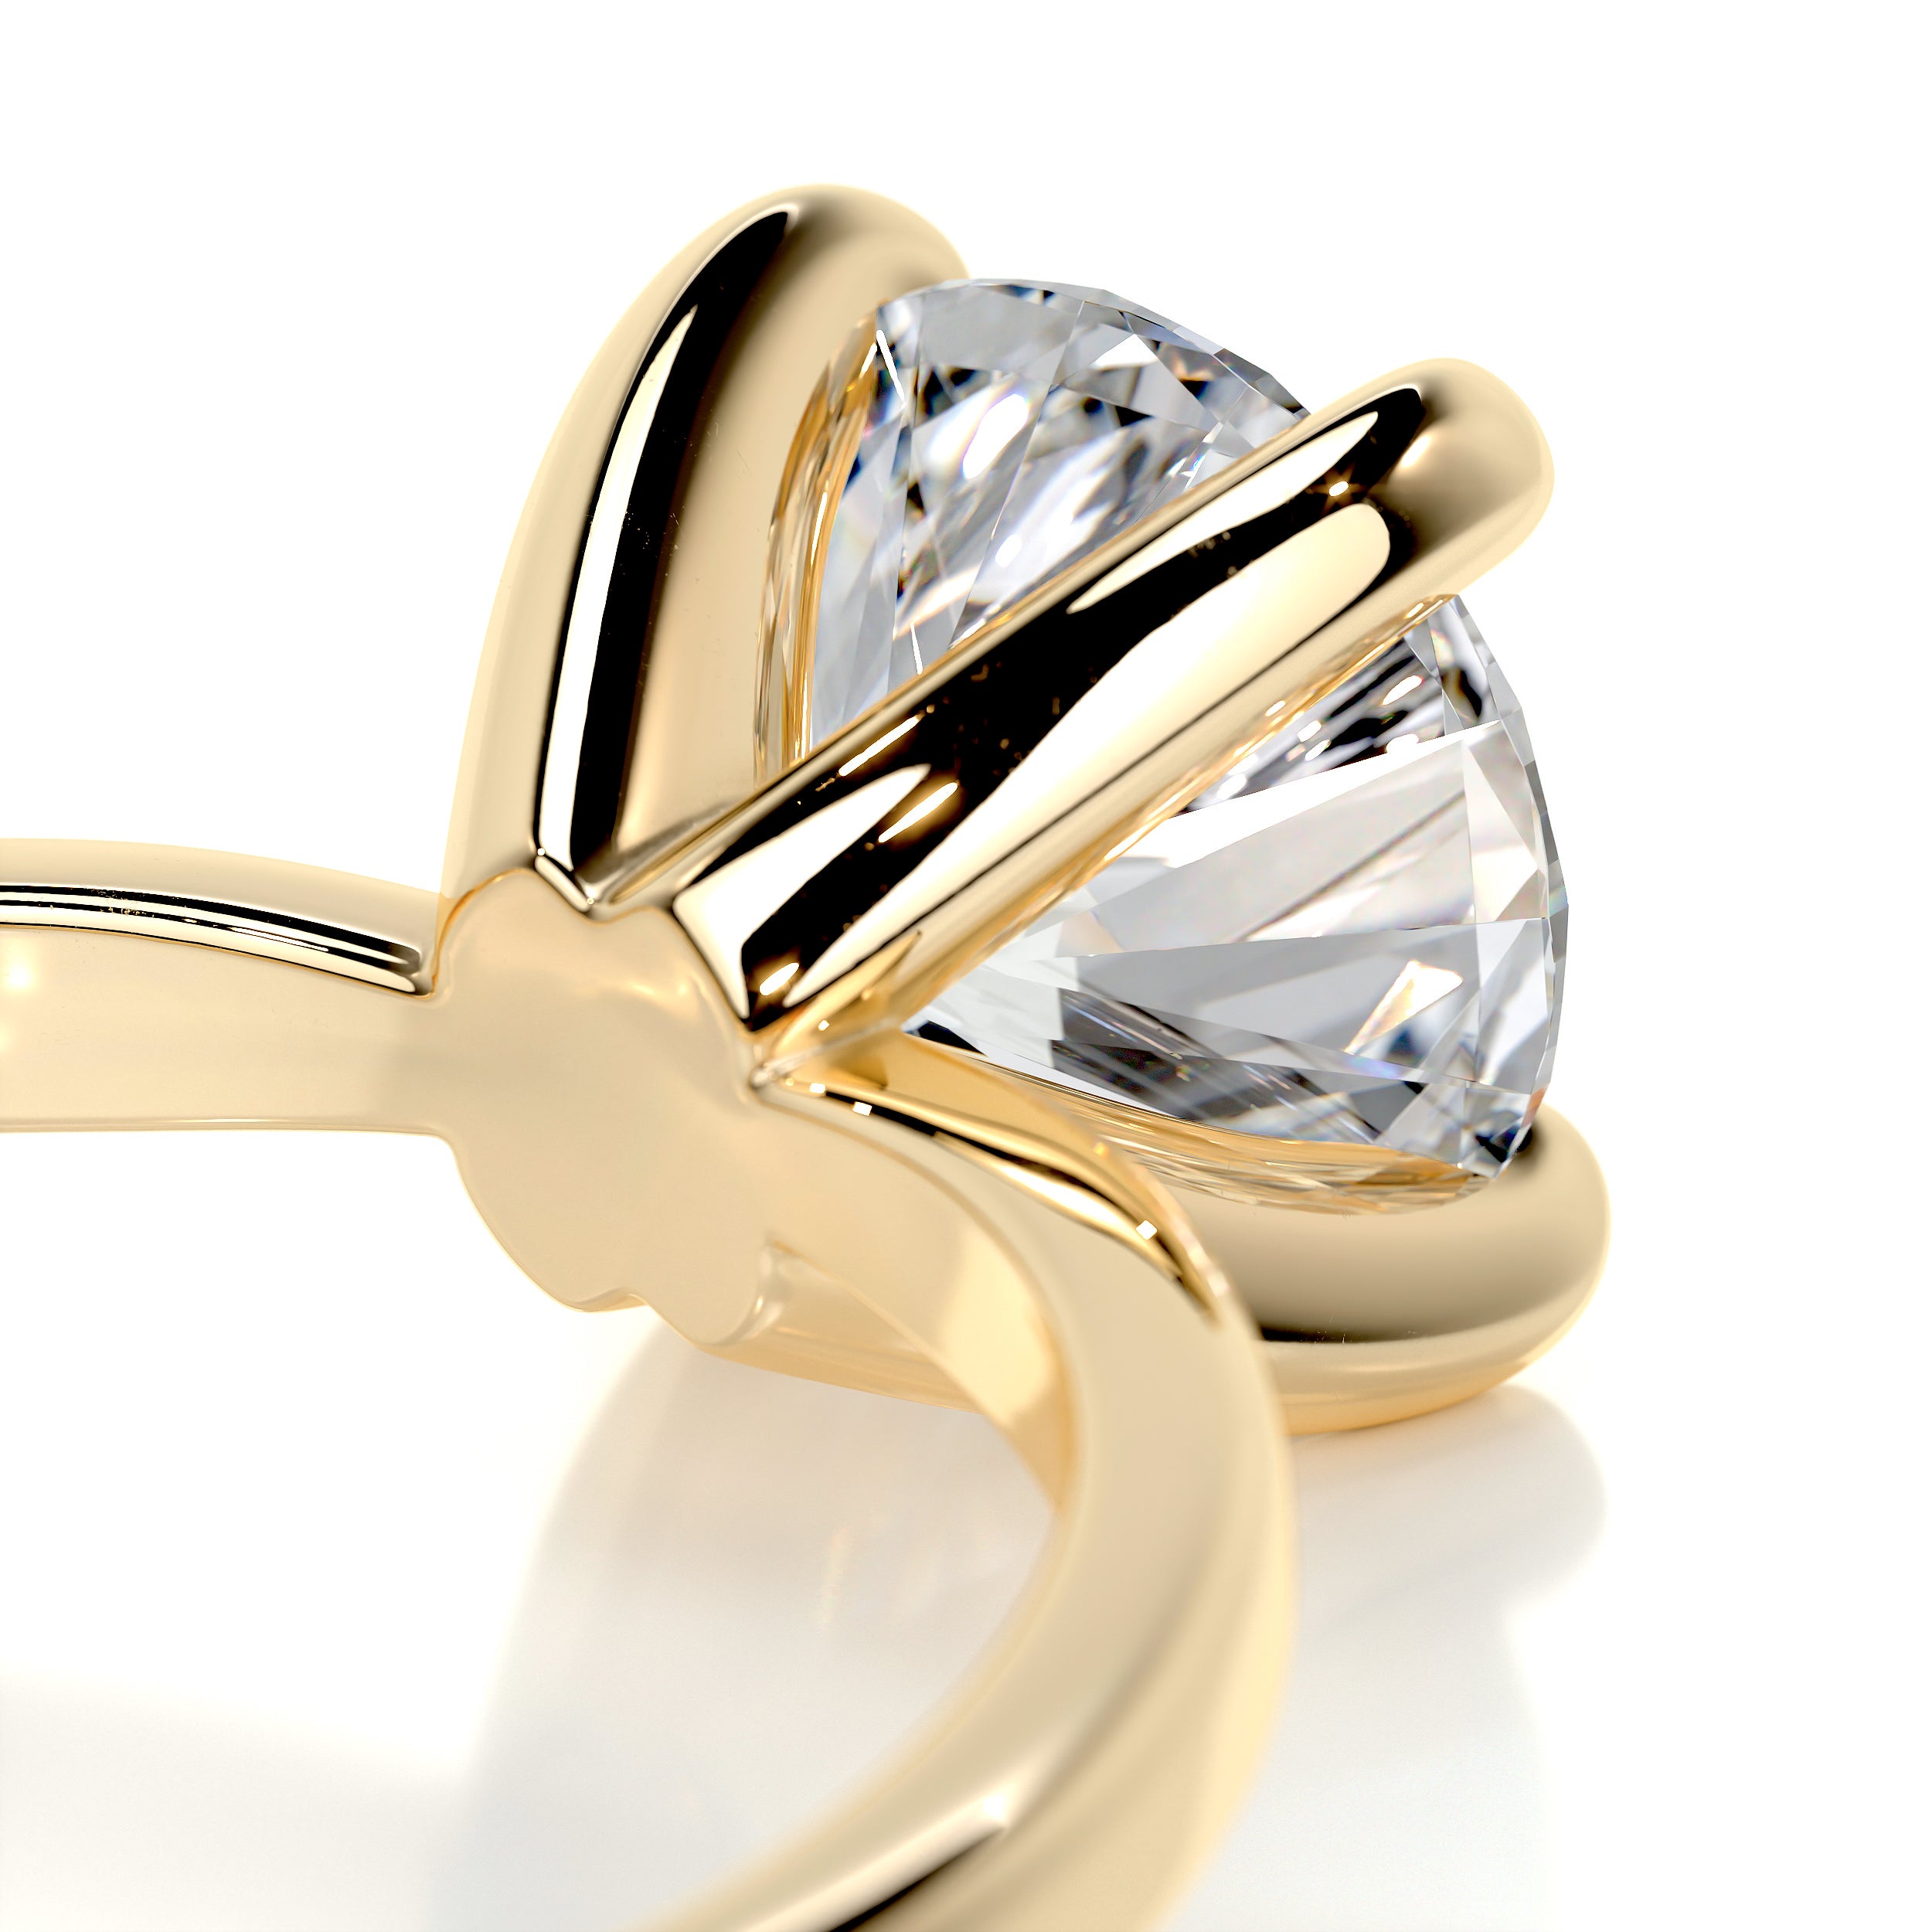 Jessica Diamond Engagement Ring   (1.5 Carat) -18K Yellow Gold